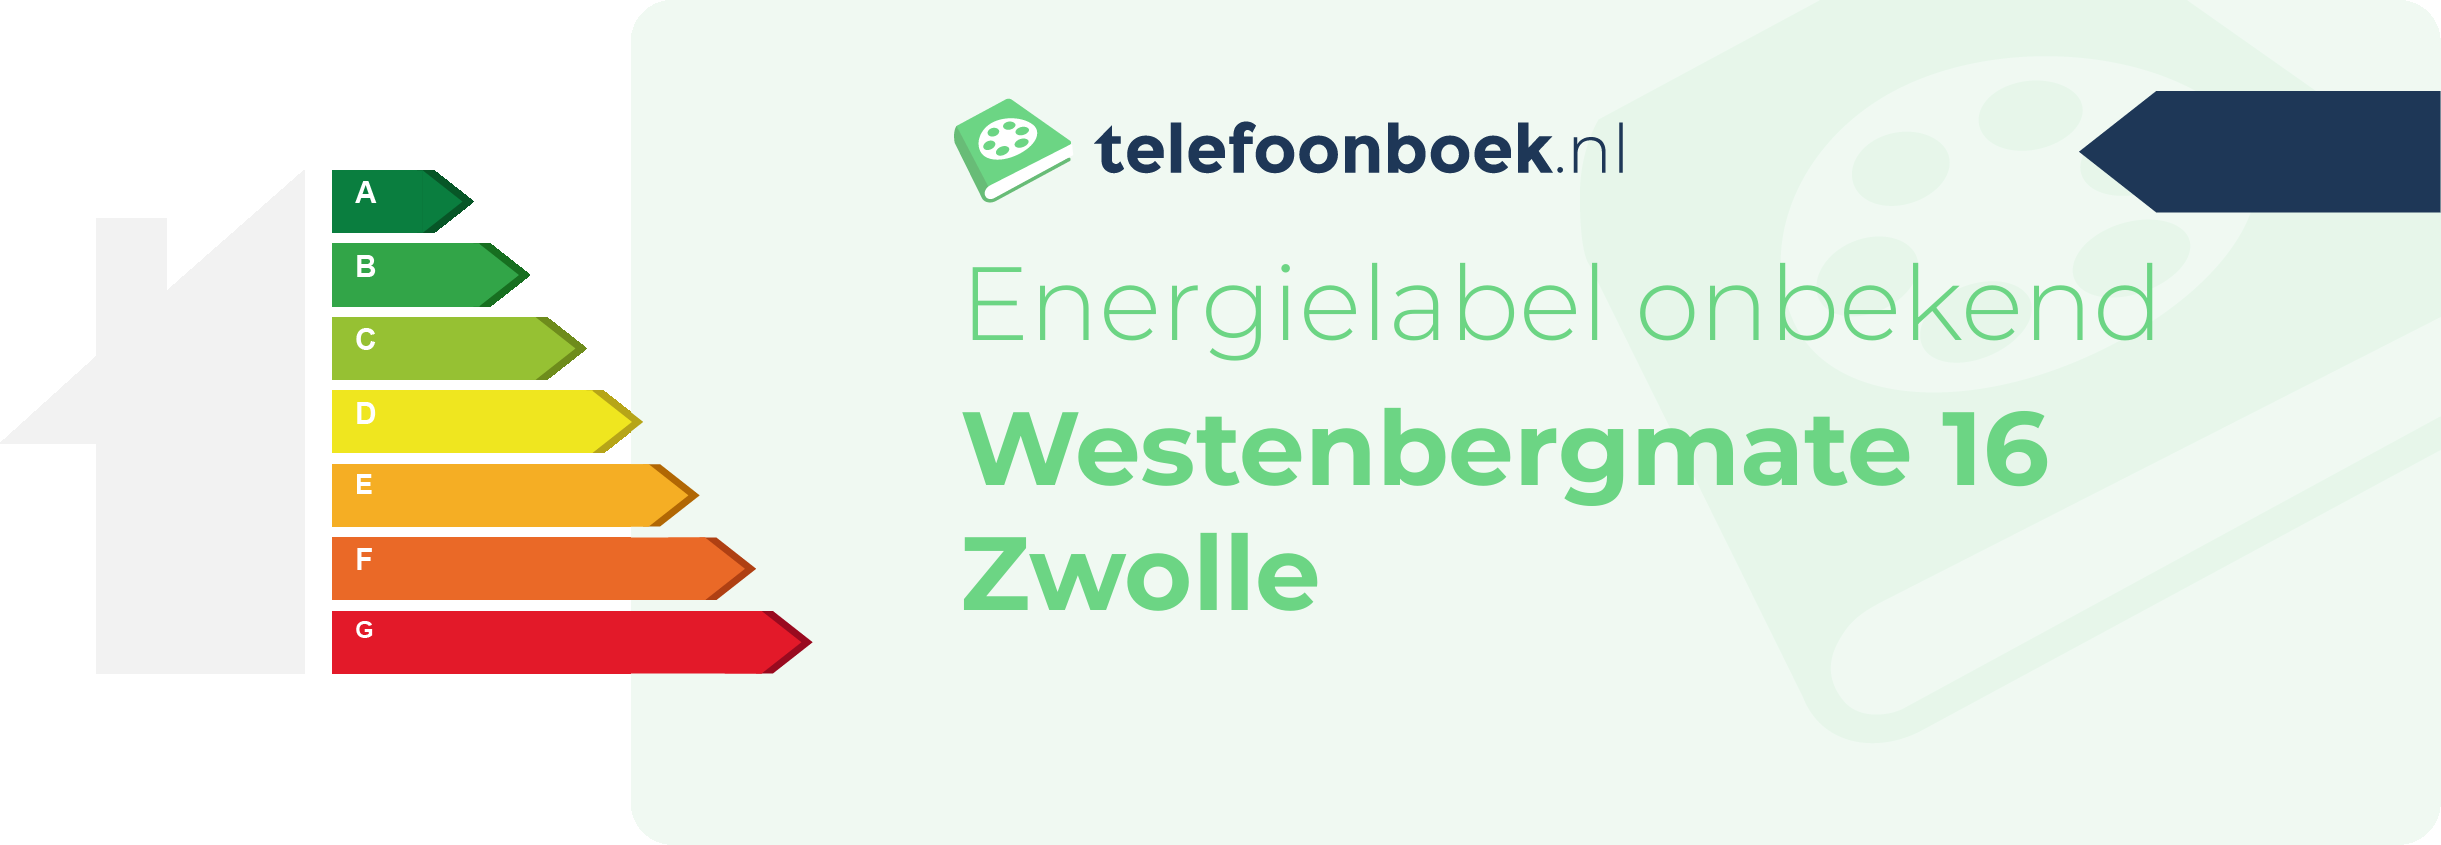 Energielabel Westenbergmate 16 Zwolle